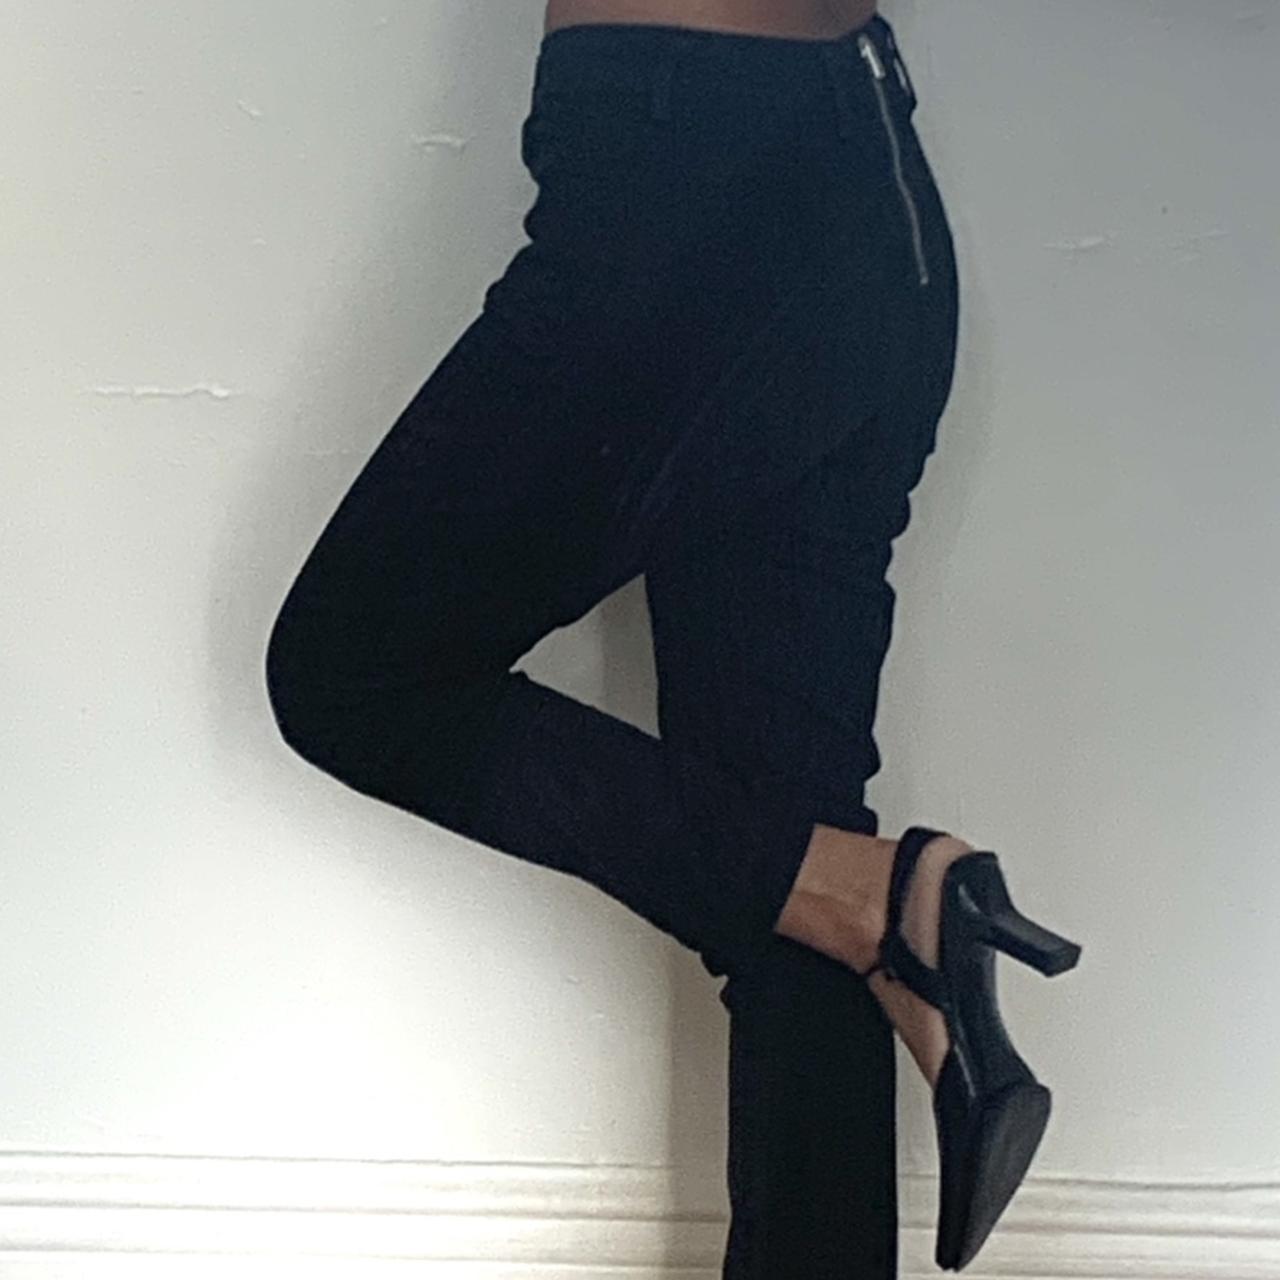 Studios back zip jeans in black. I had this... - Depop